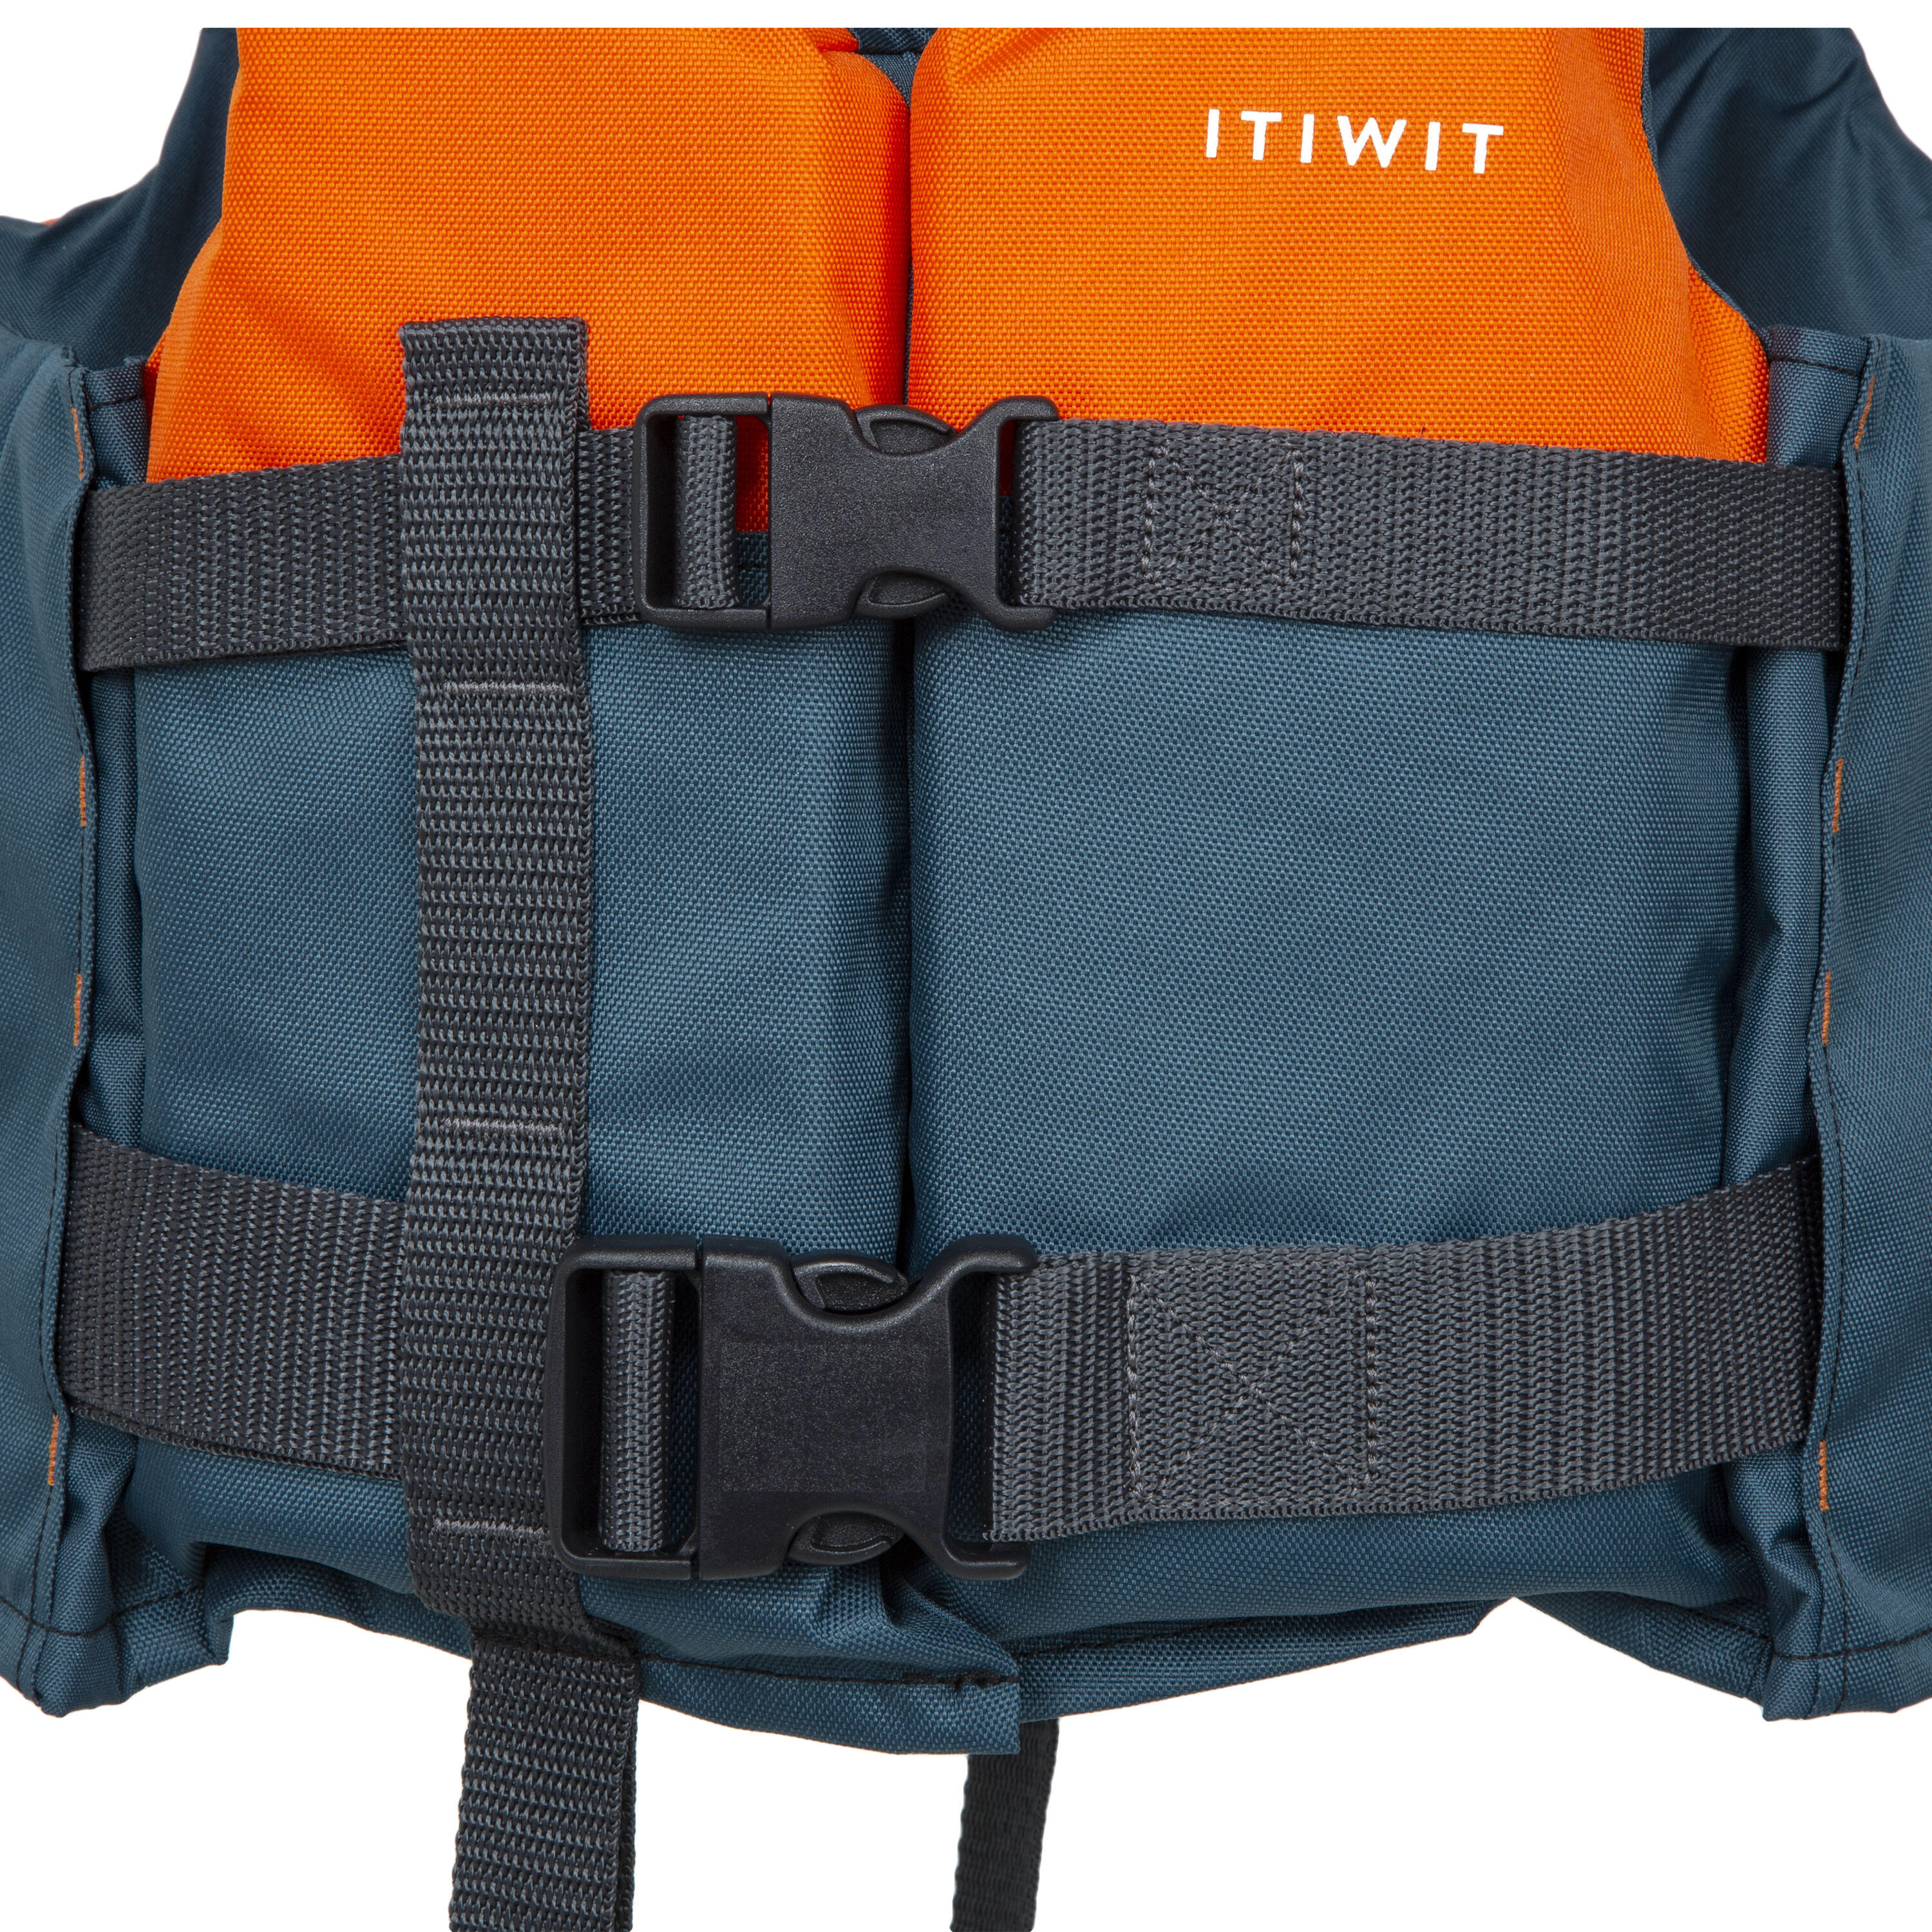 Life vest 50N+ Blue/Orange - Kayaks, SUPs, Dinghies 5/12